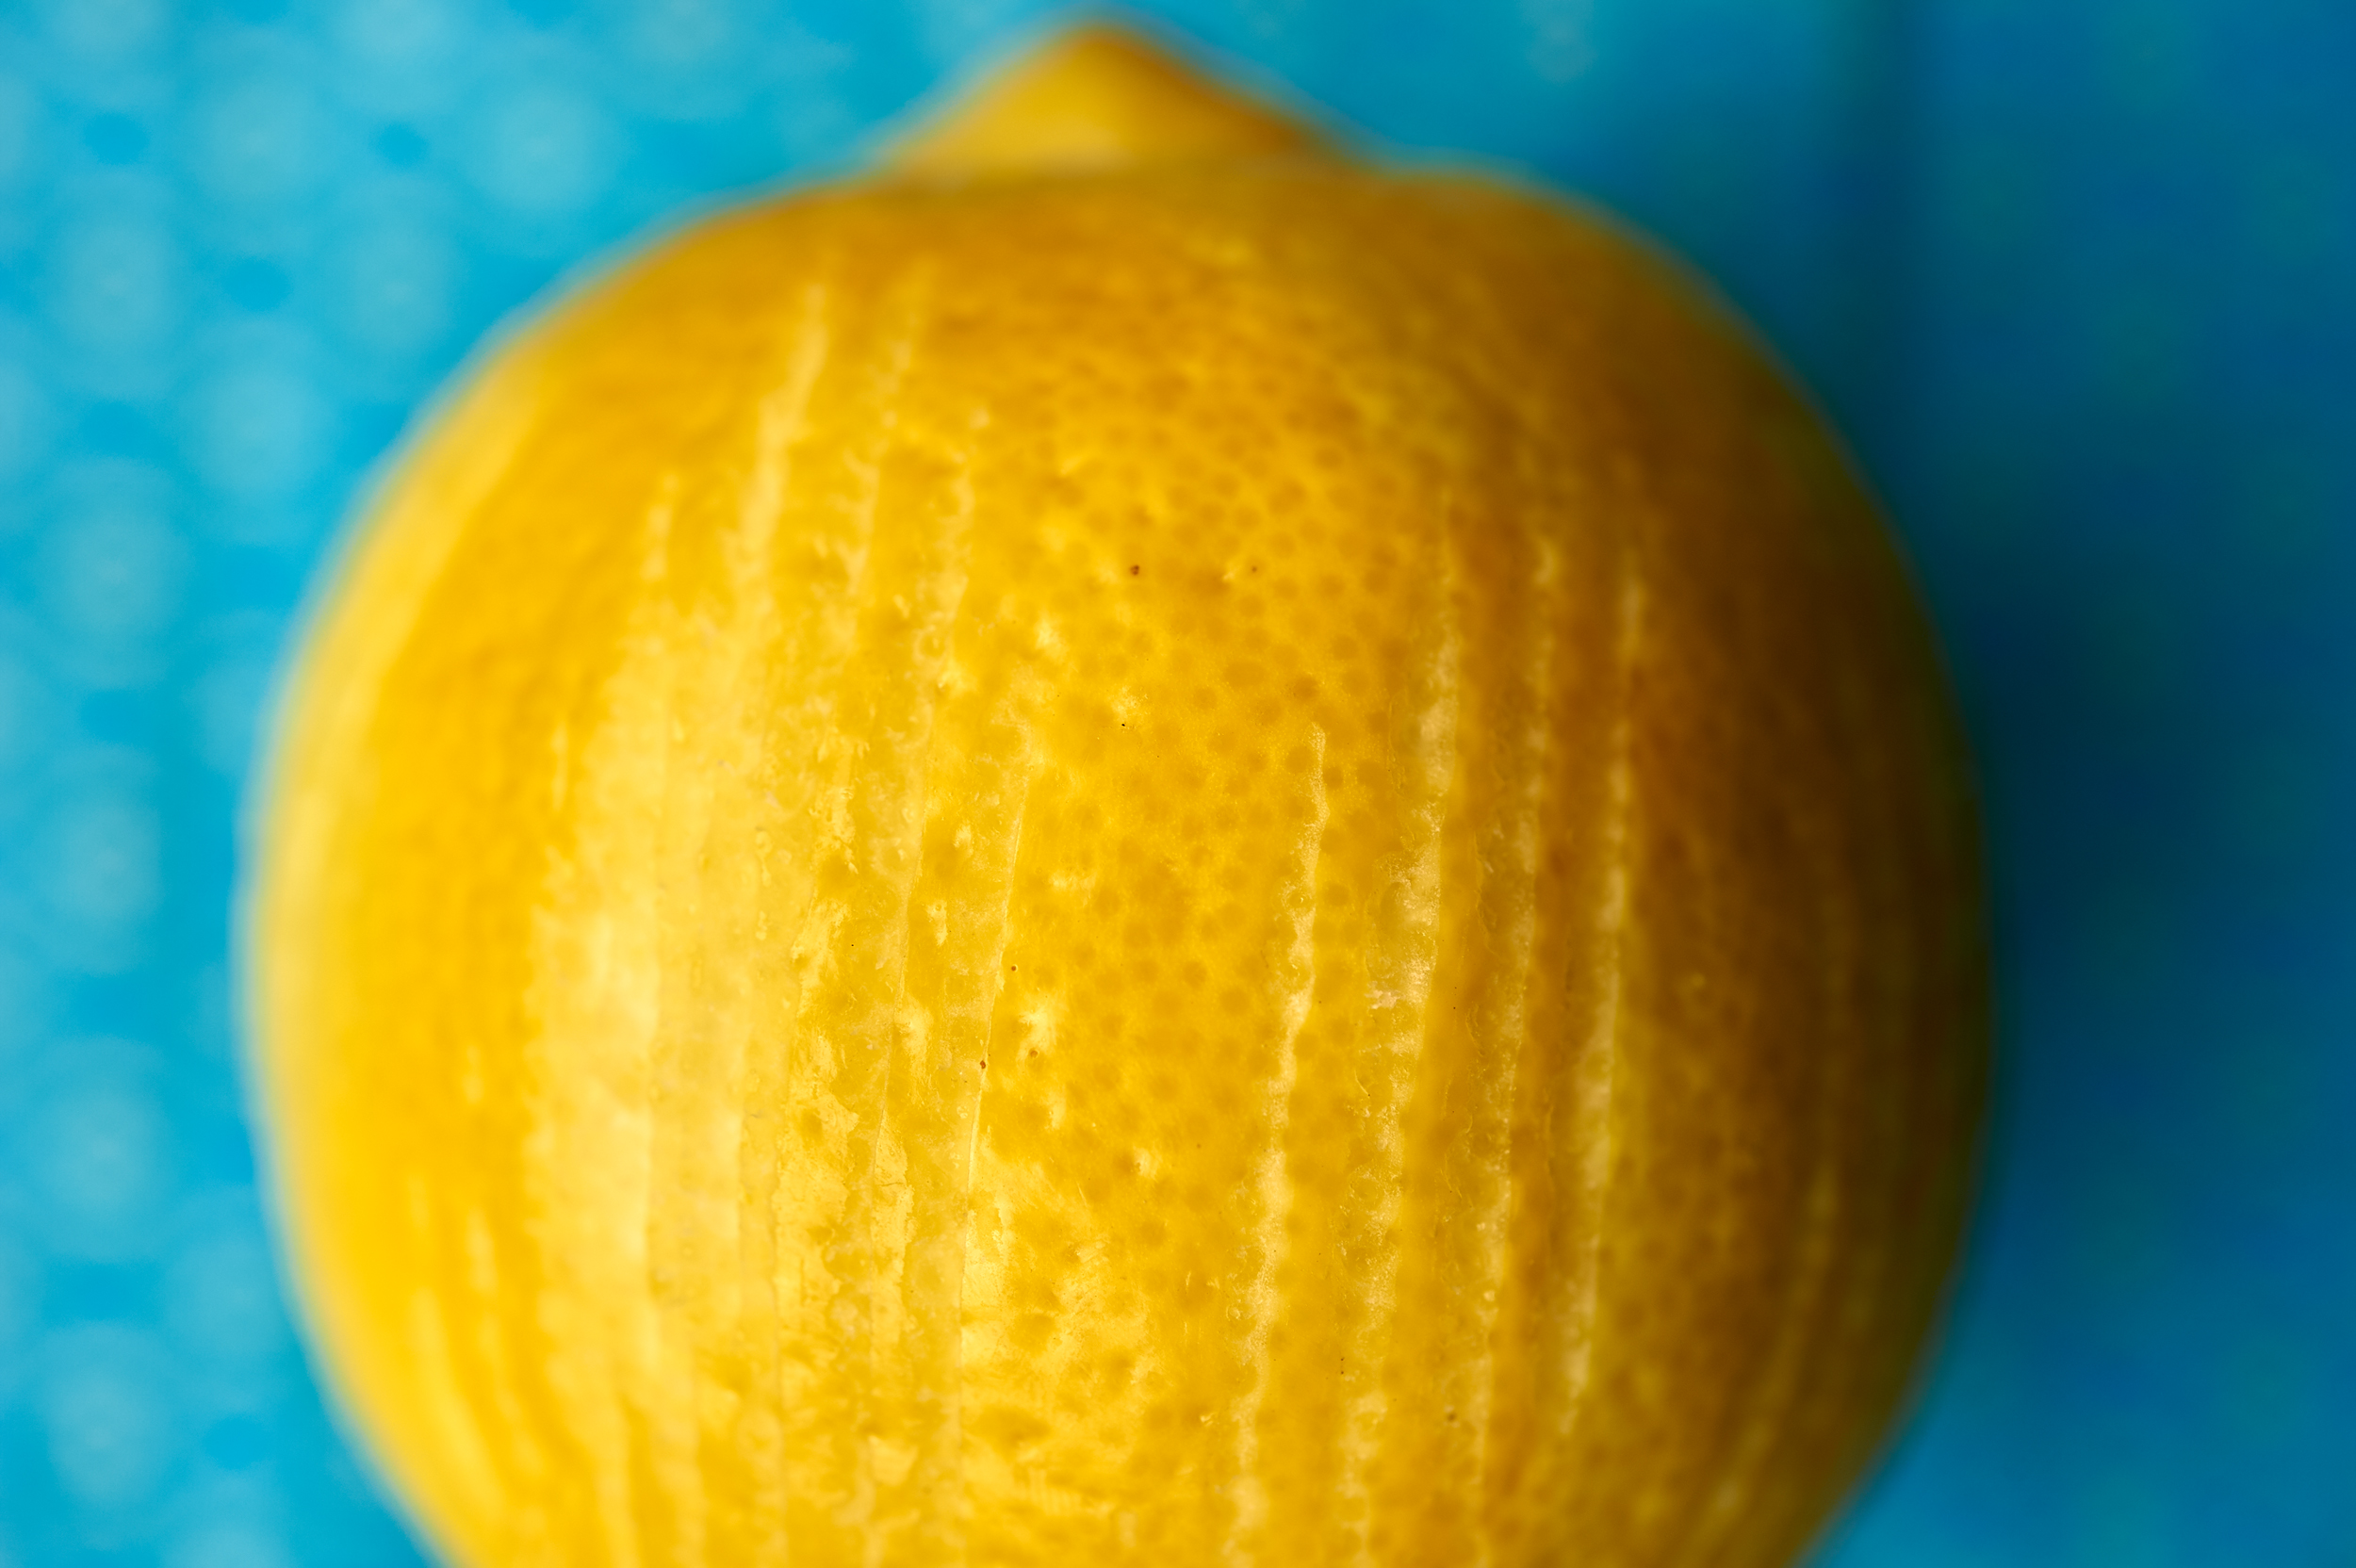 Lemon close up